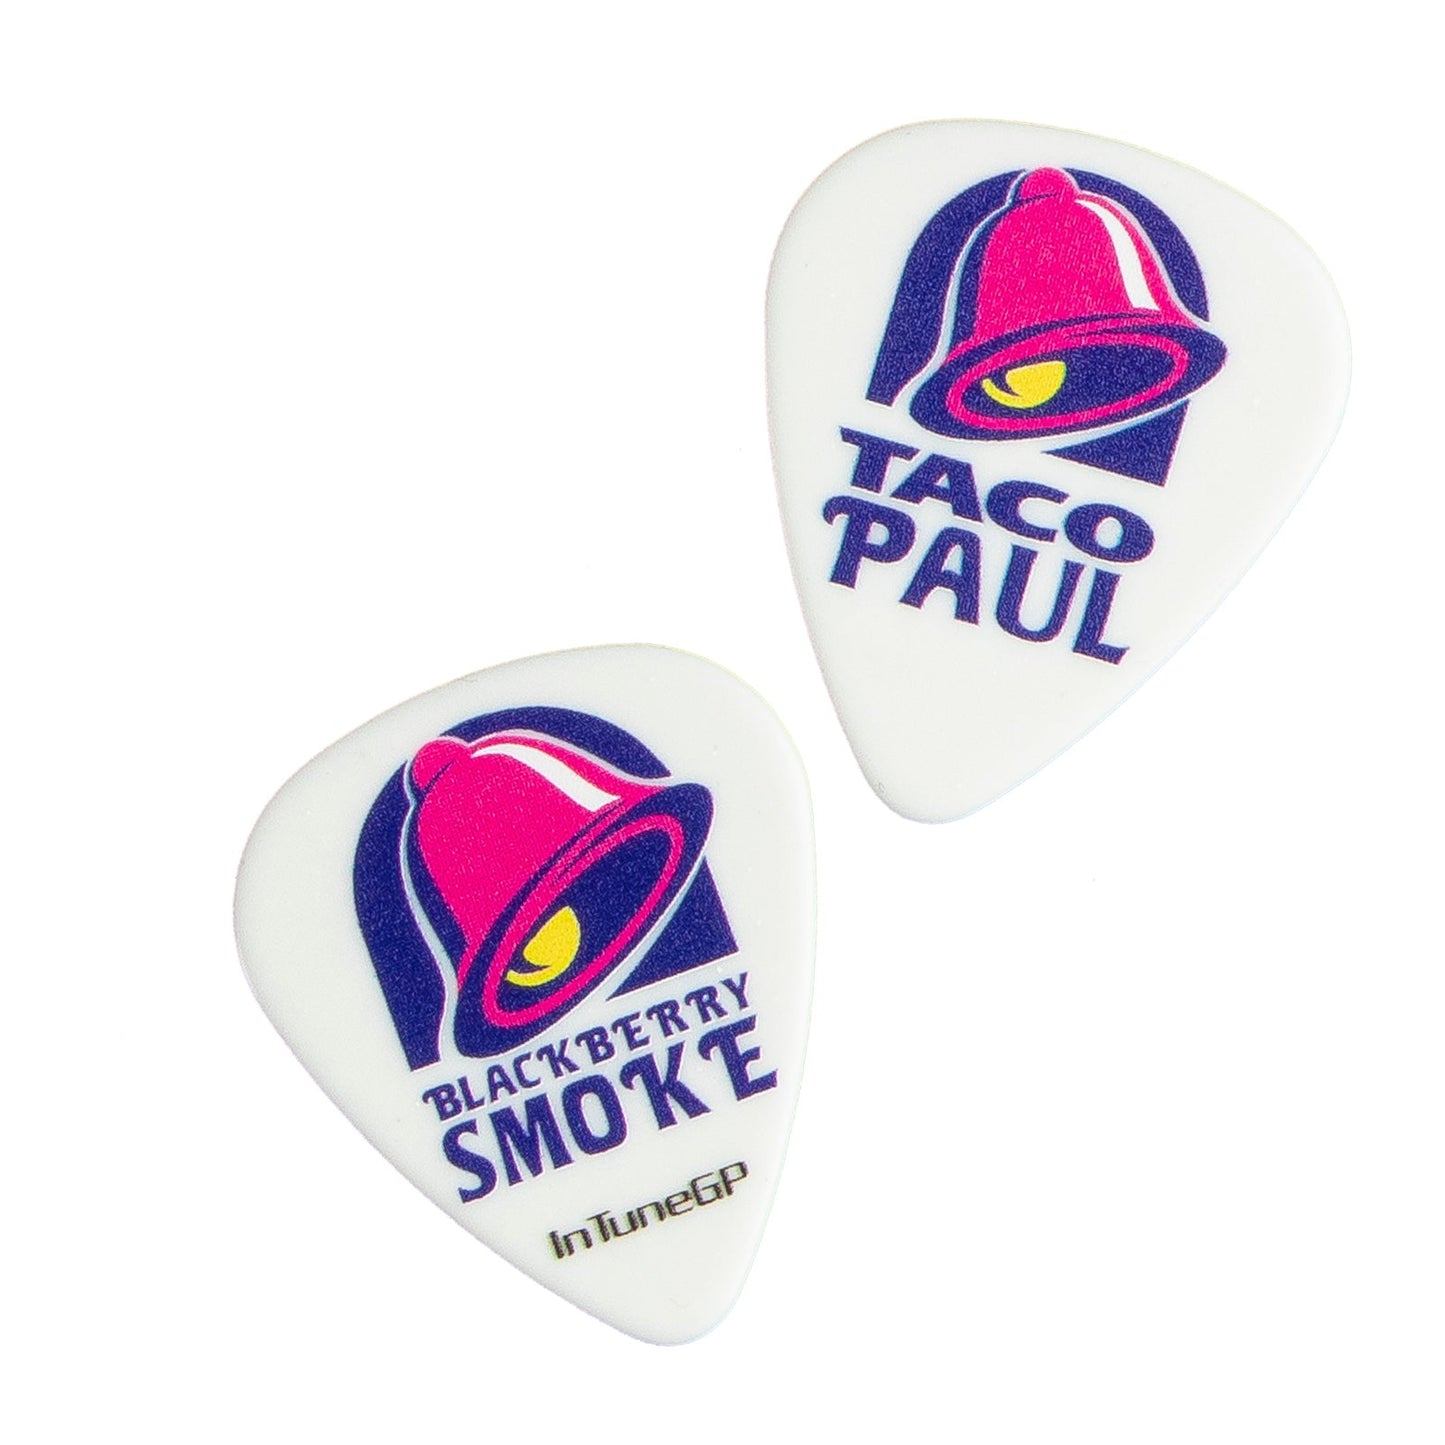 2 Taco Paul Guitar Picks